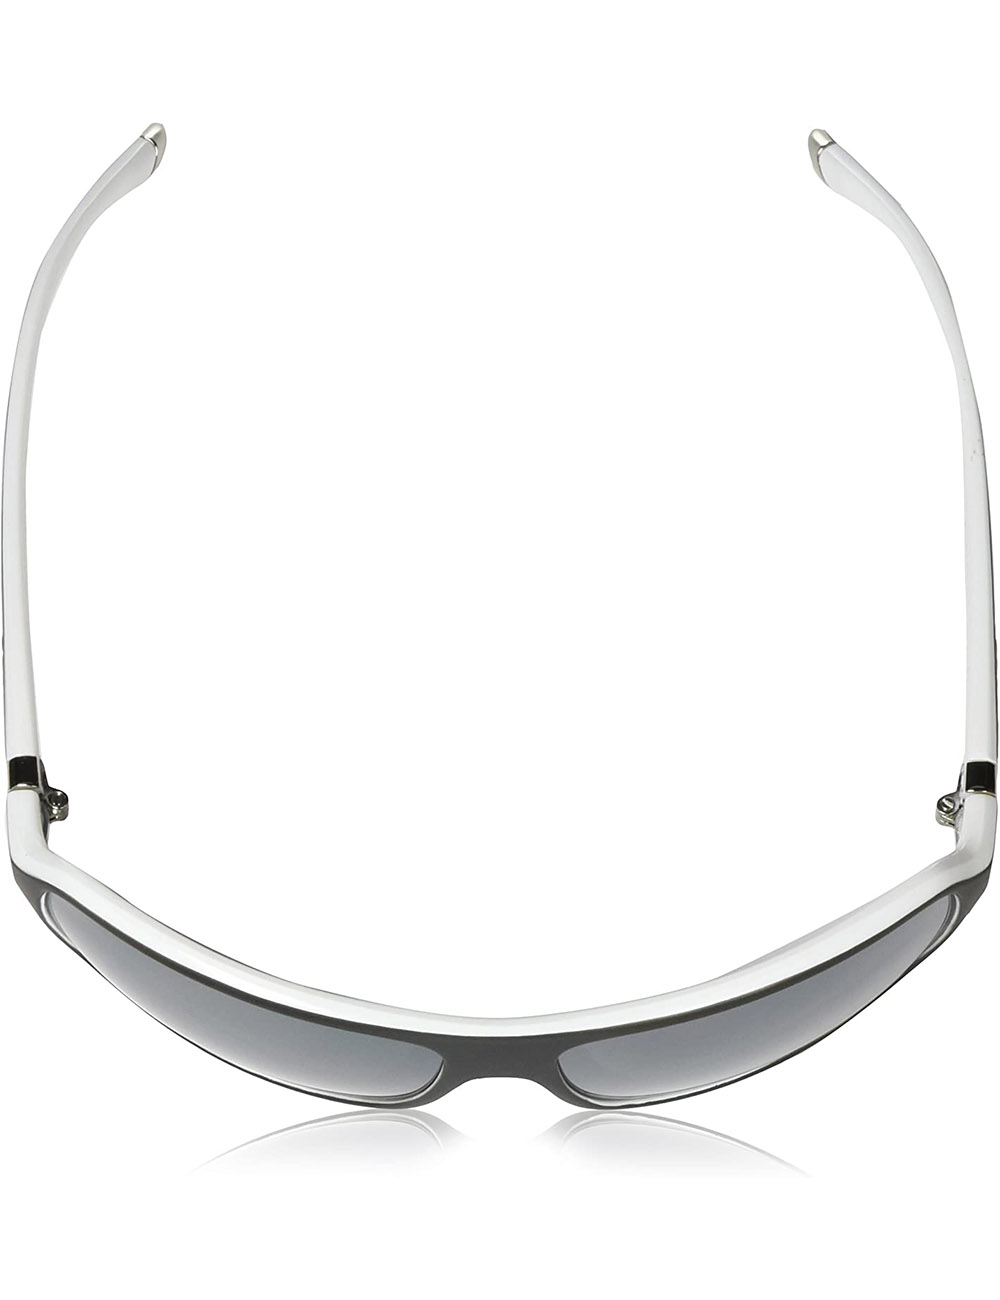 CASCO Солнцезащитные очки SX-61 BICOLOR BLACK-WHITE Артикул: 1741.02